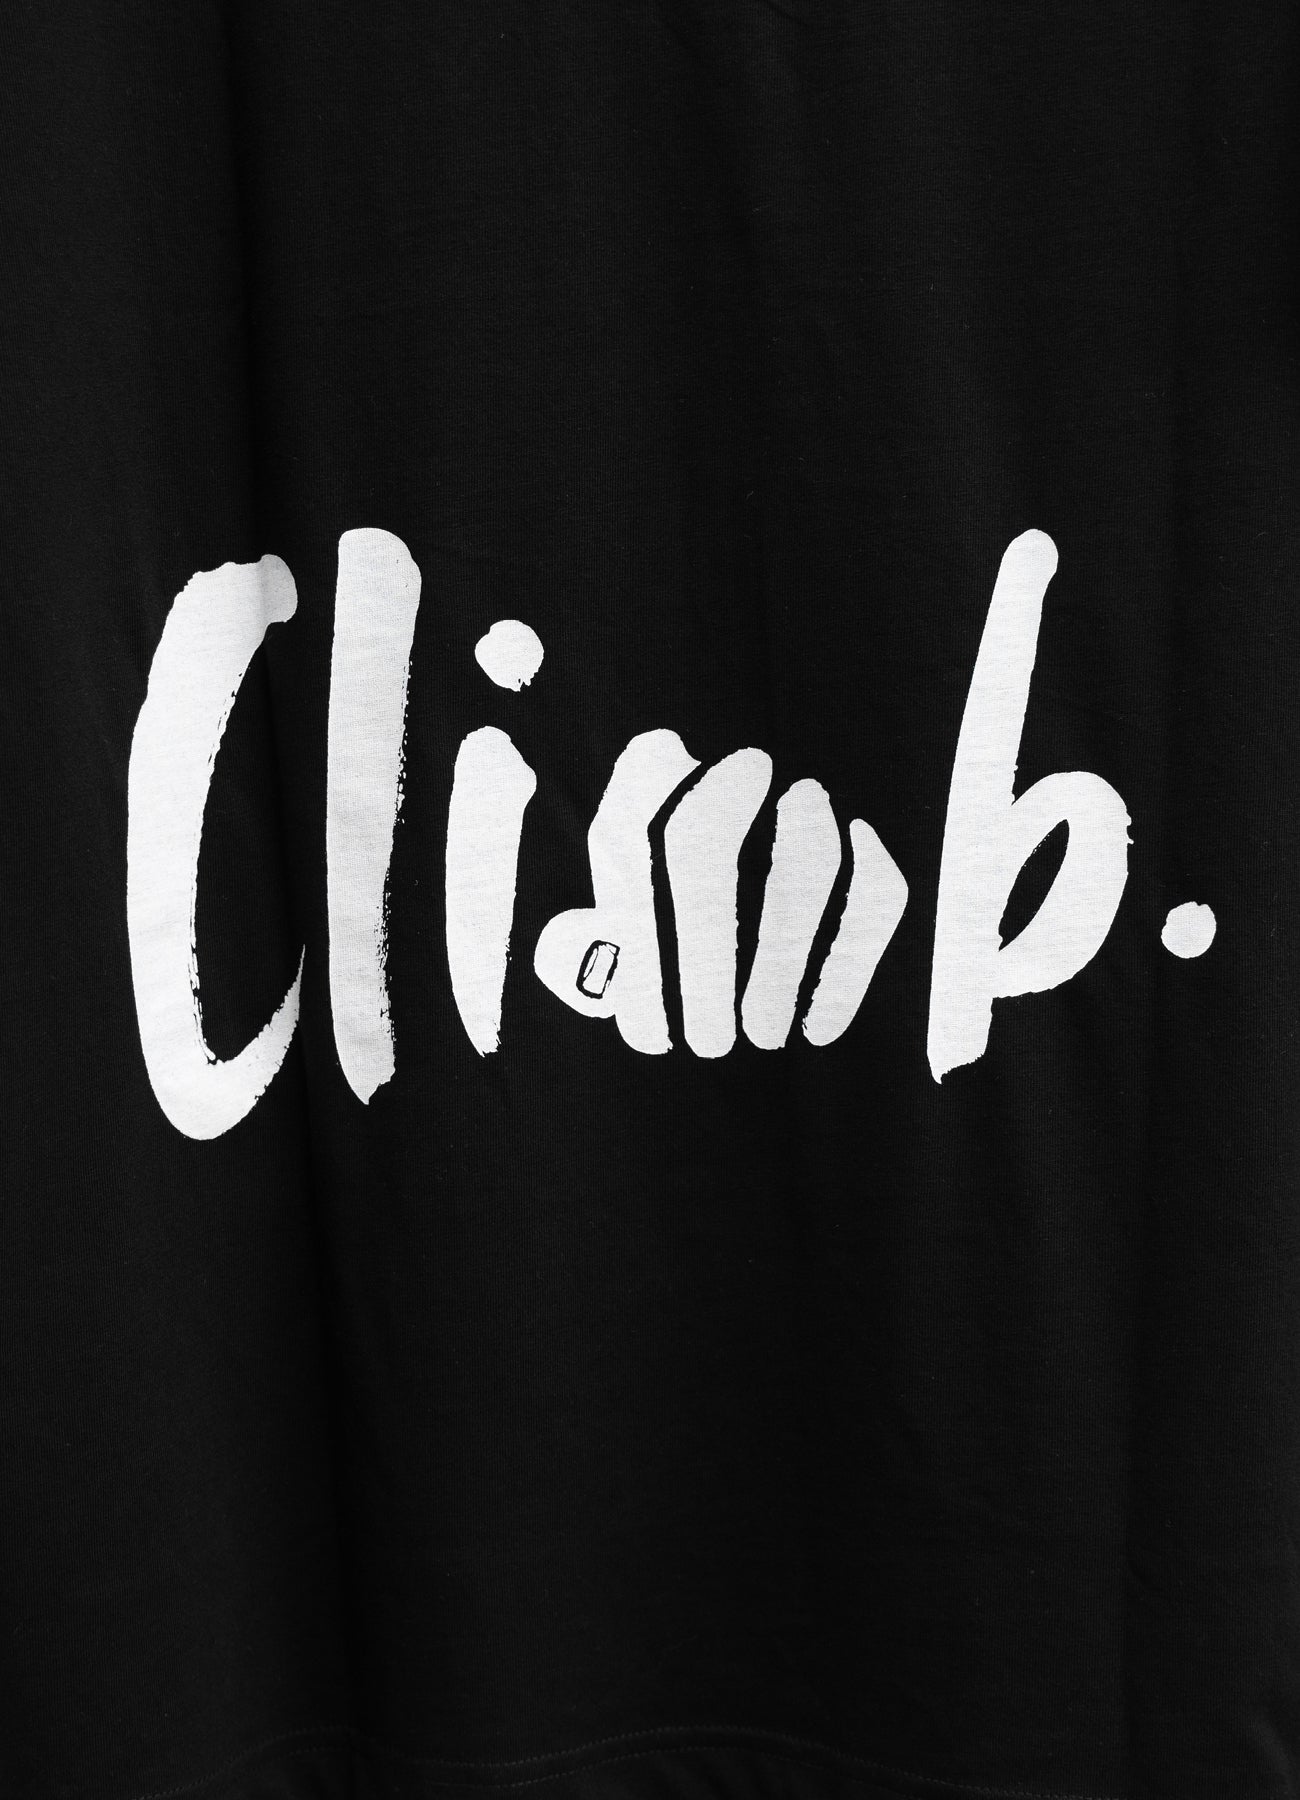 Climb.